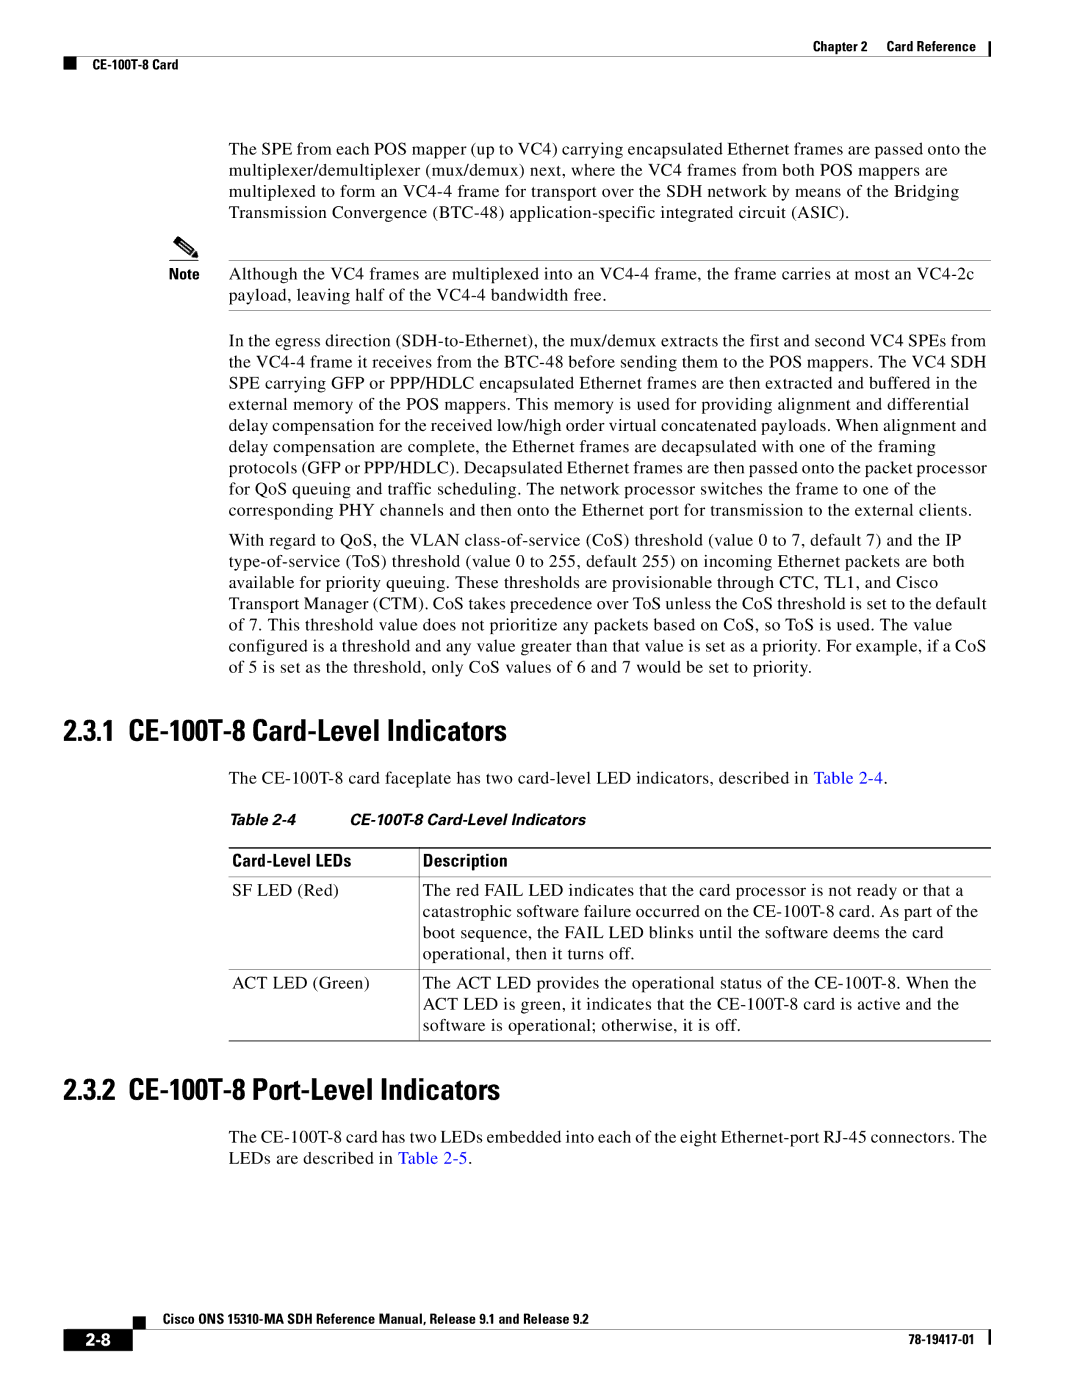 Cisco Systems 15310-MA manual 1 CE-100T-8 Card-Level Indicators, 2 CE-100T-8 Port-Level Indicators 